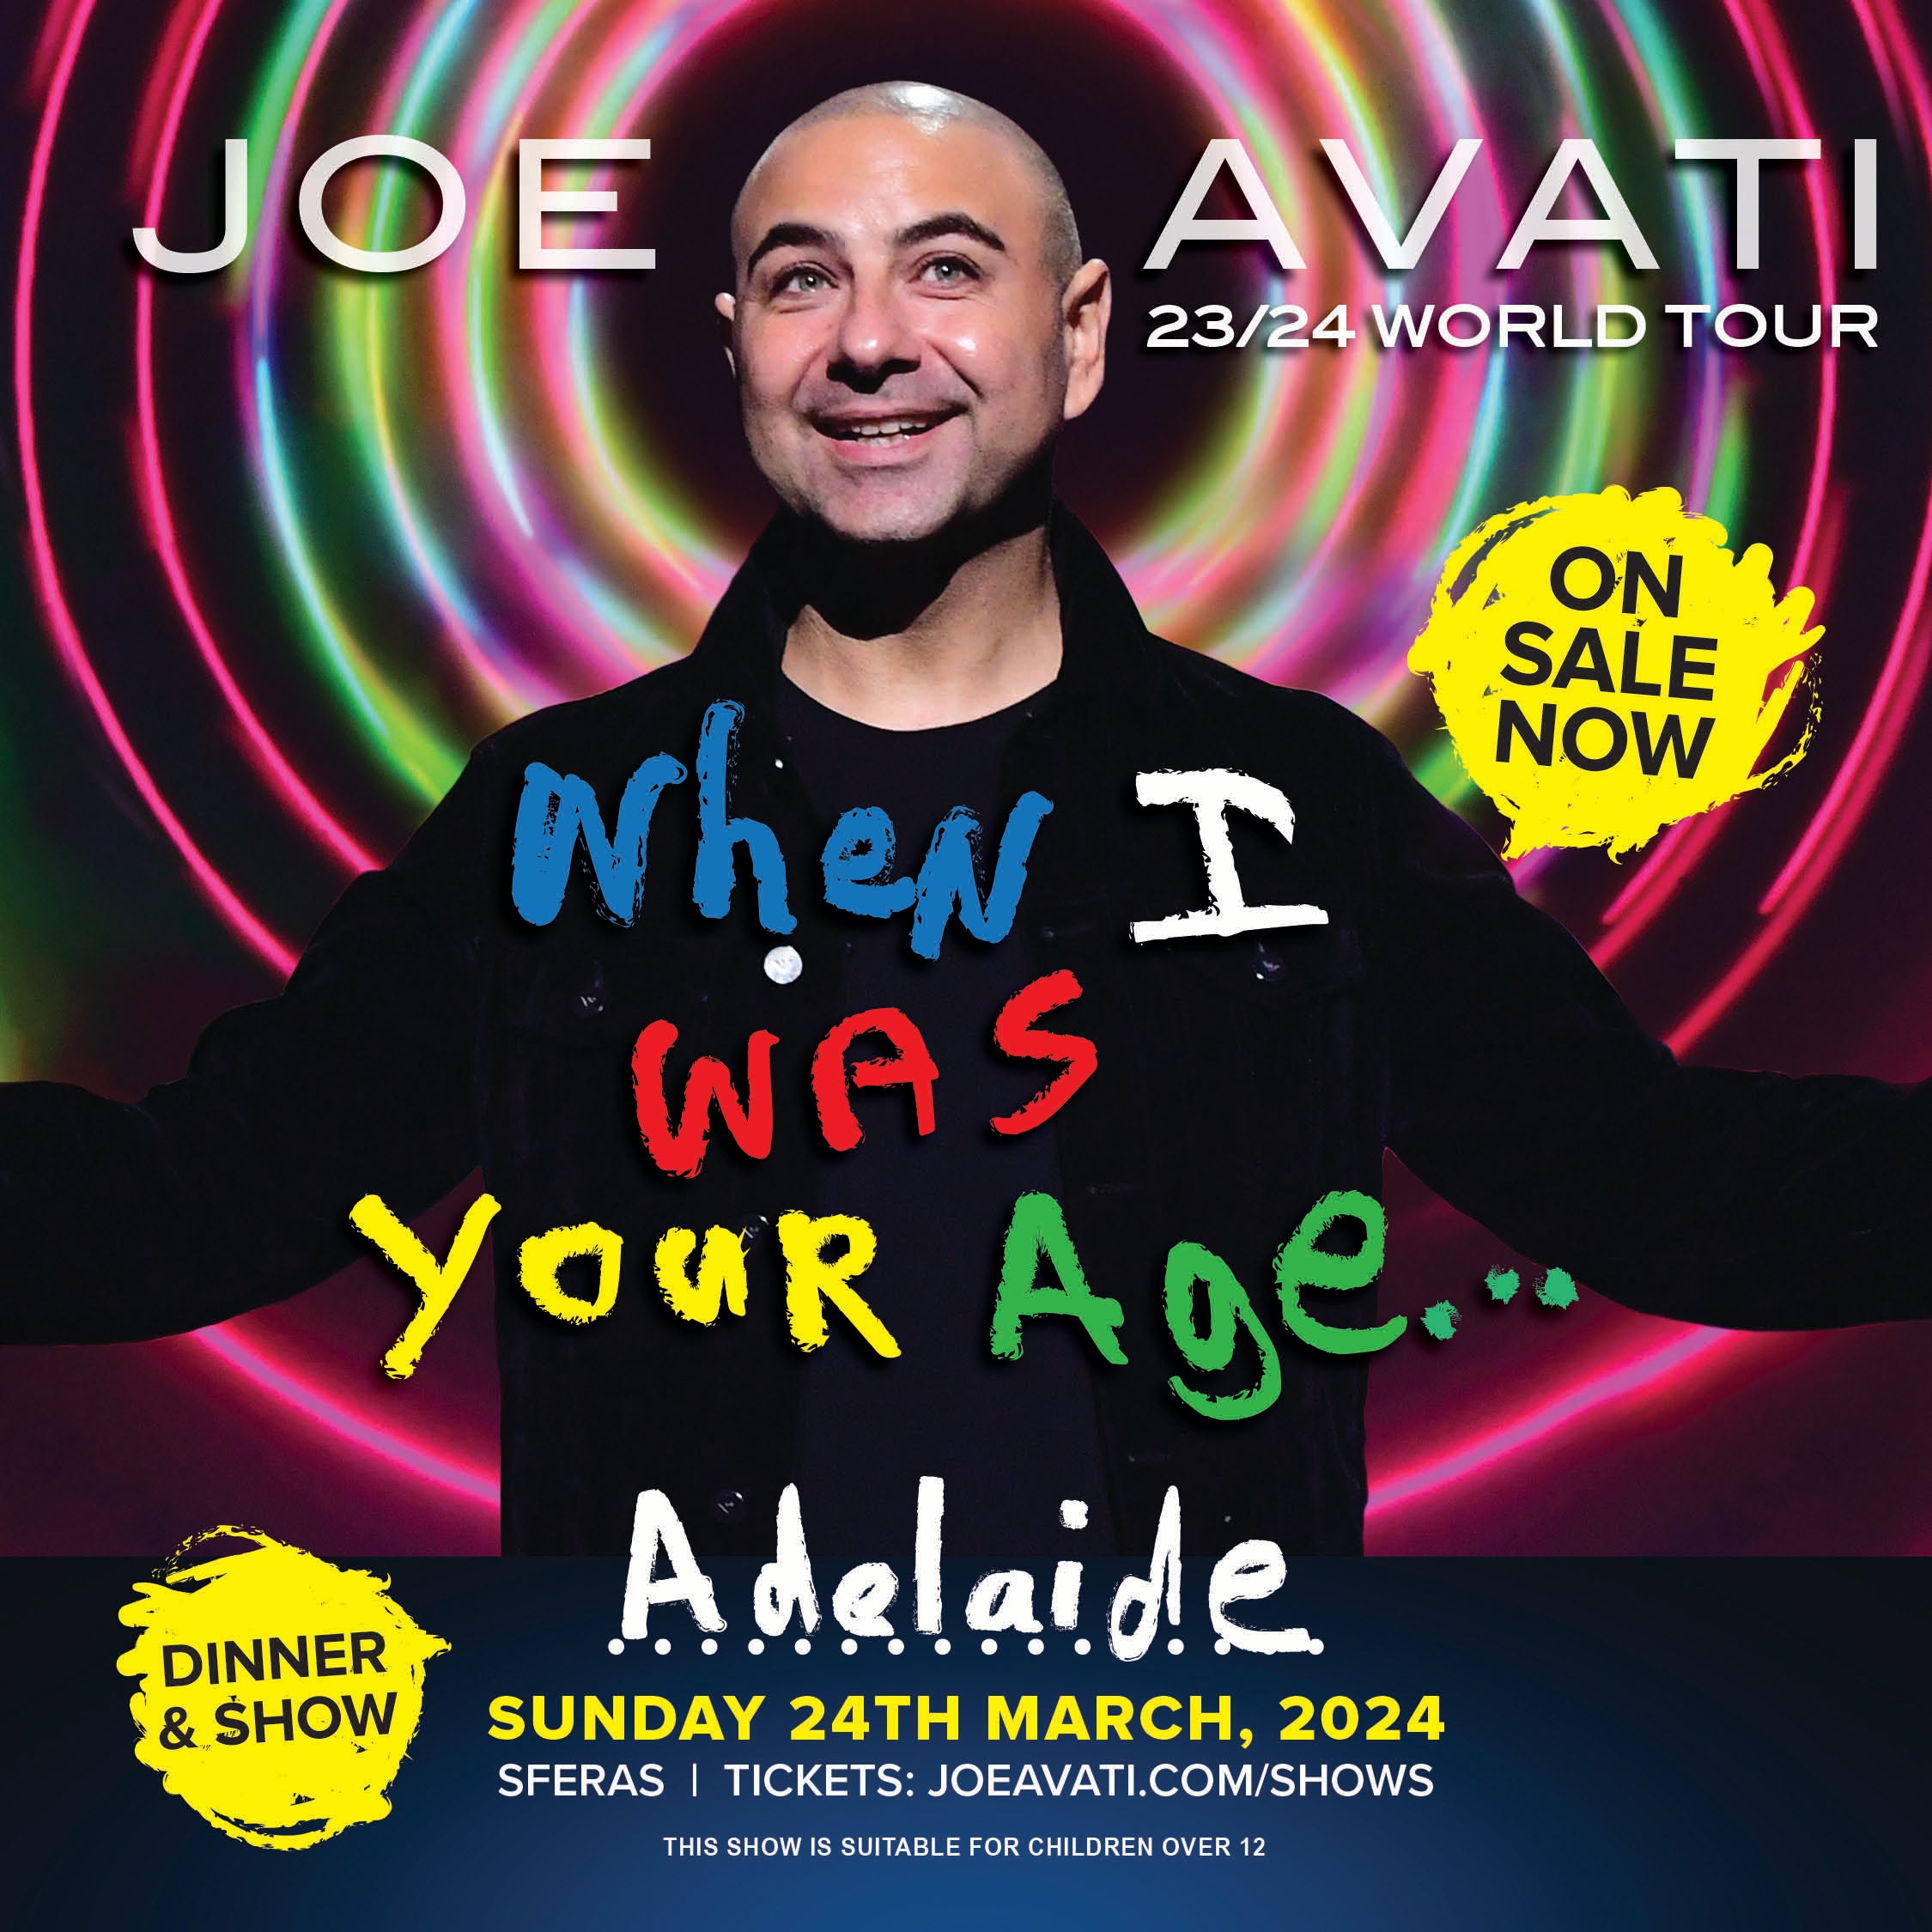 JOE AVATI - WORLD TOUR. "When I was Your Age"